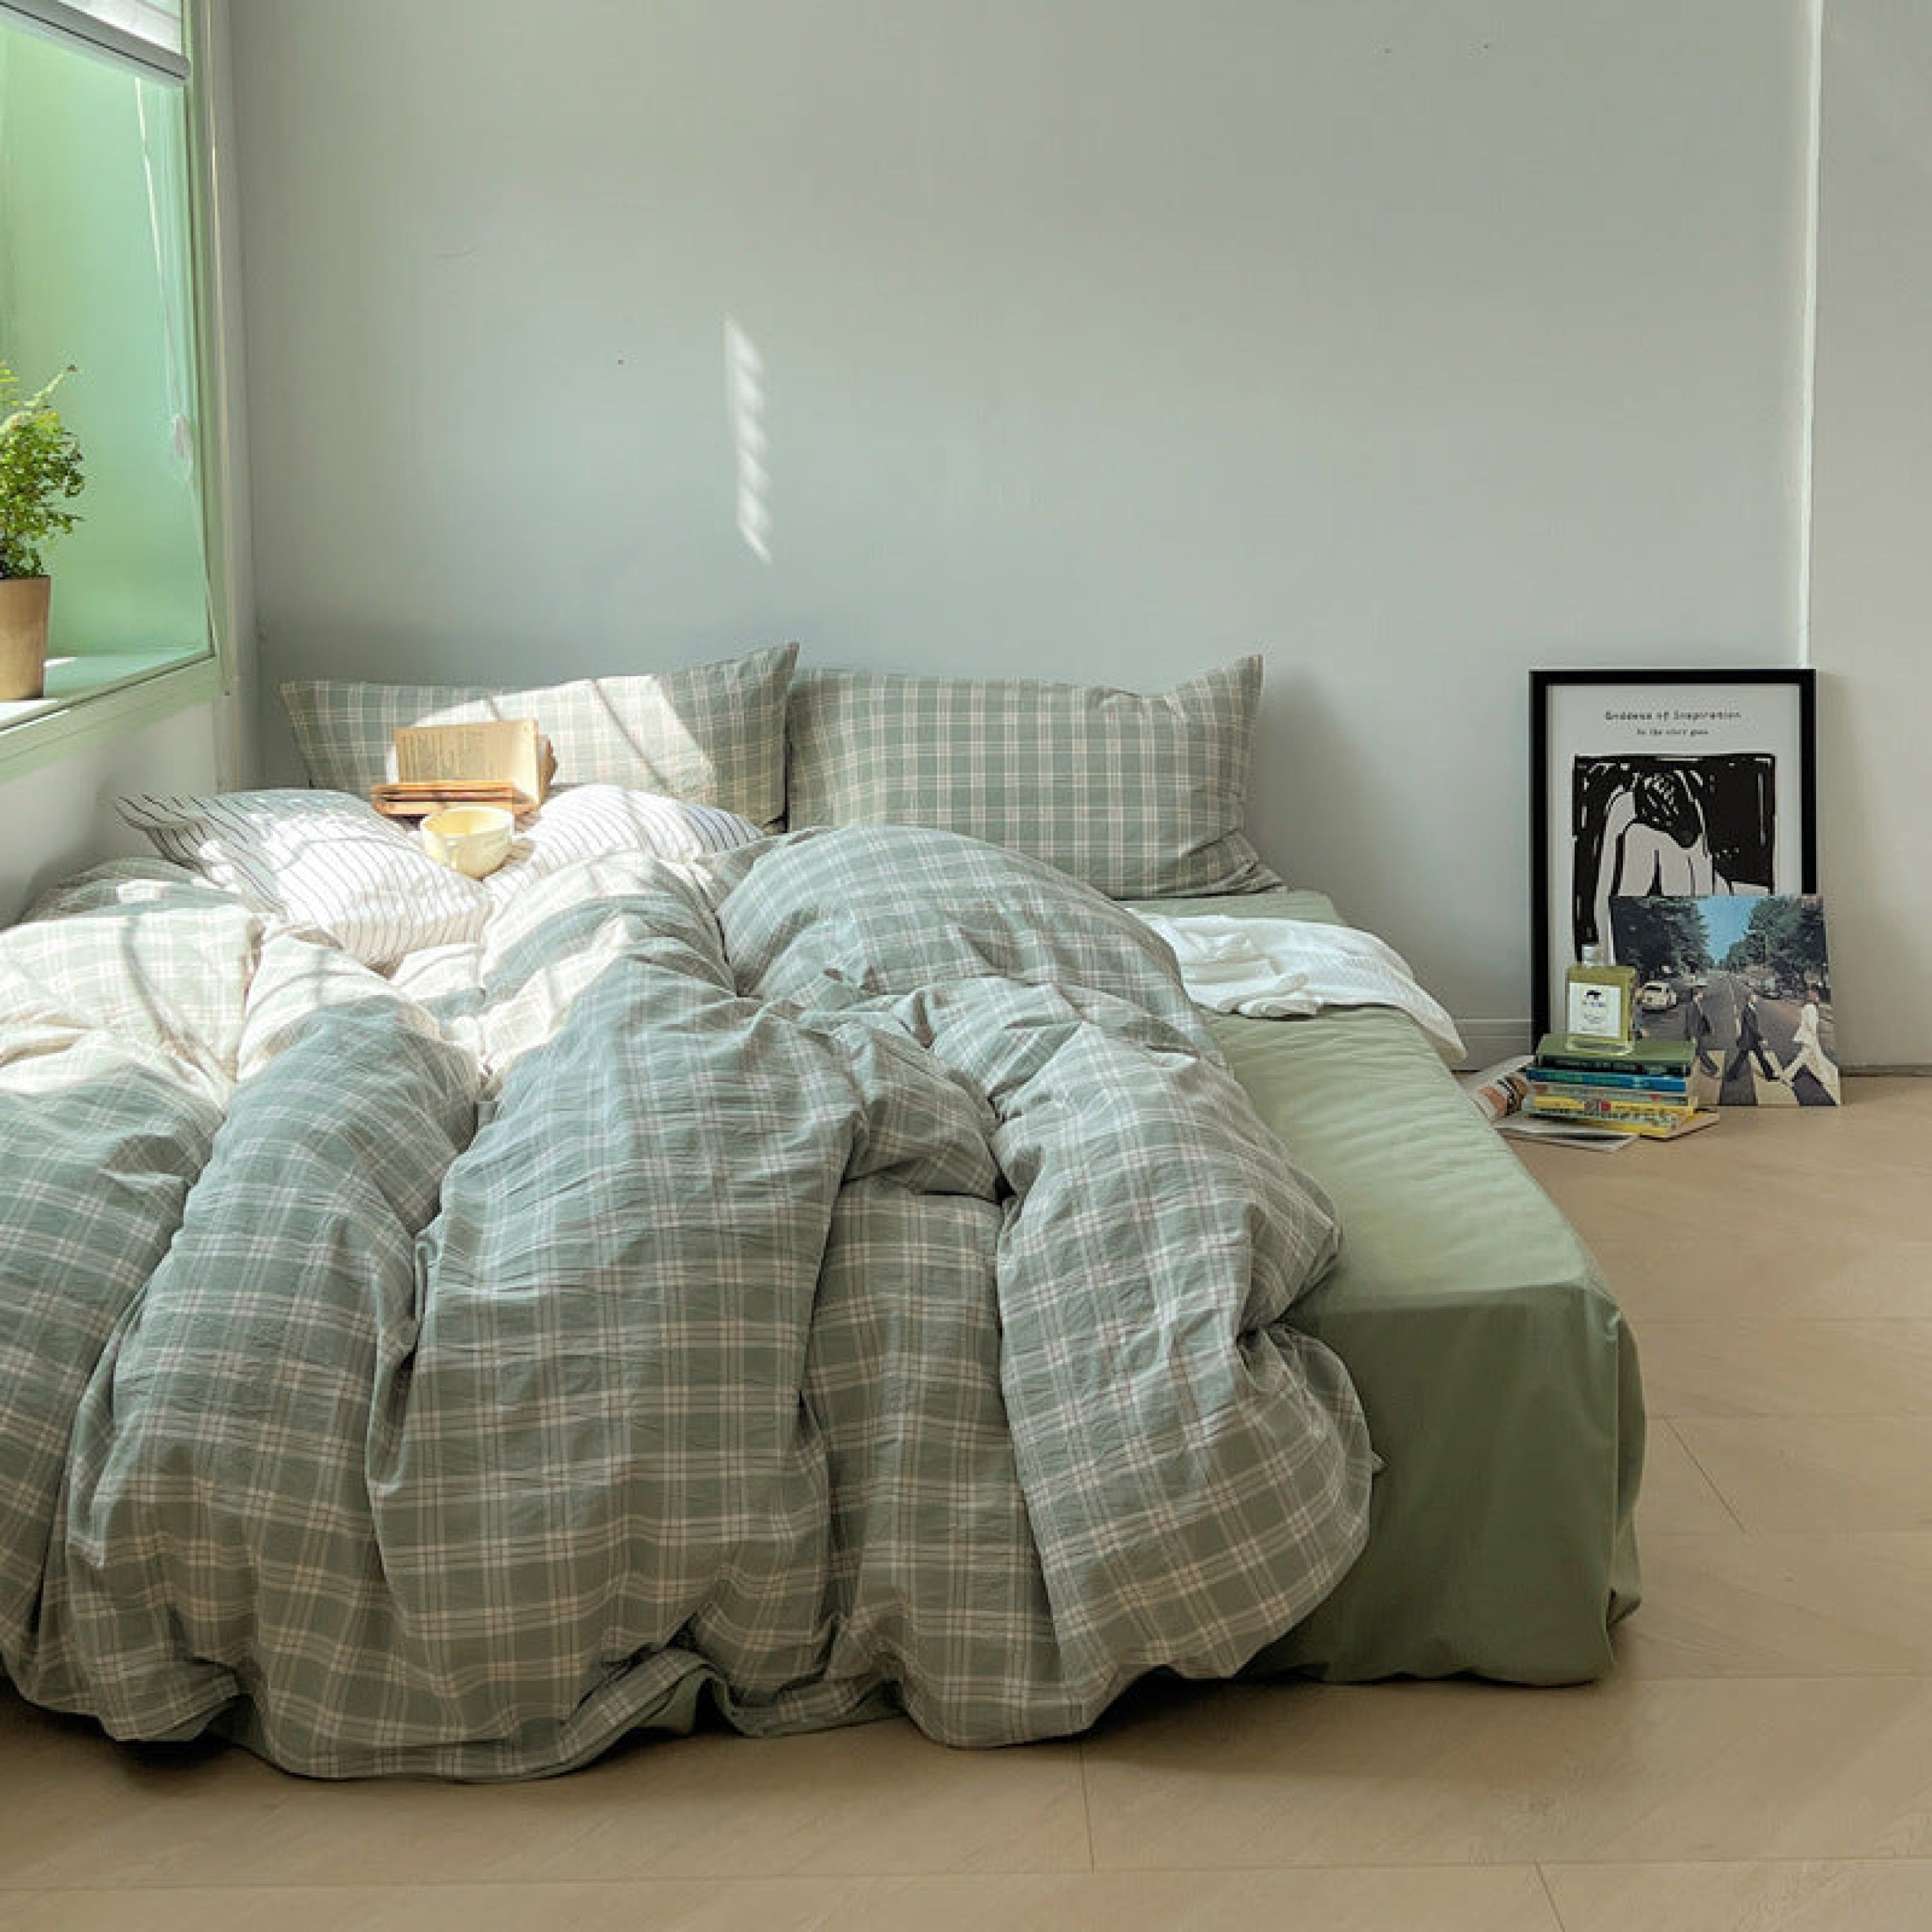 Soft Plaid Bedding Set / Cream Green, Best Stylish Bedding